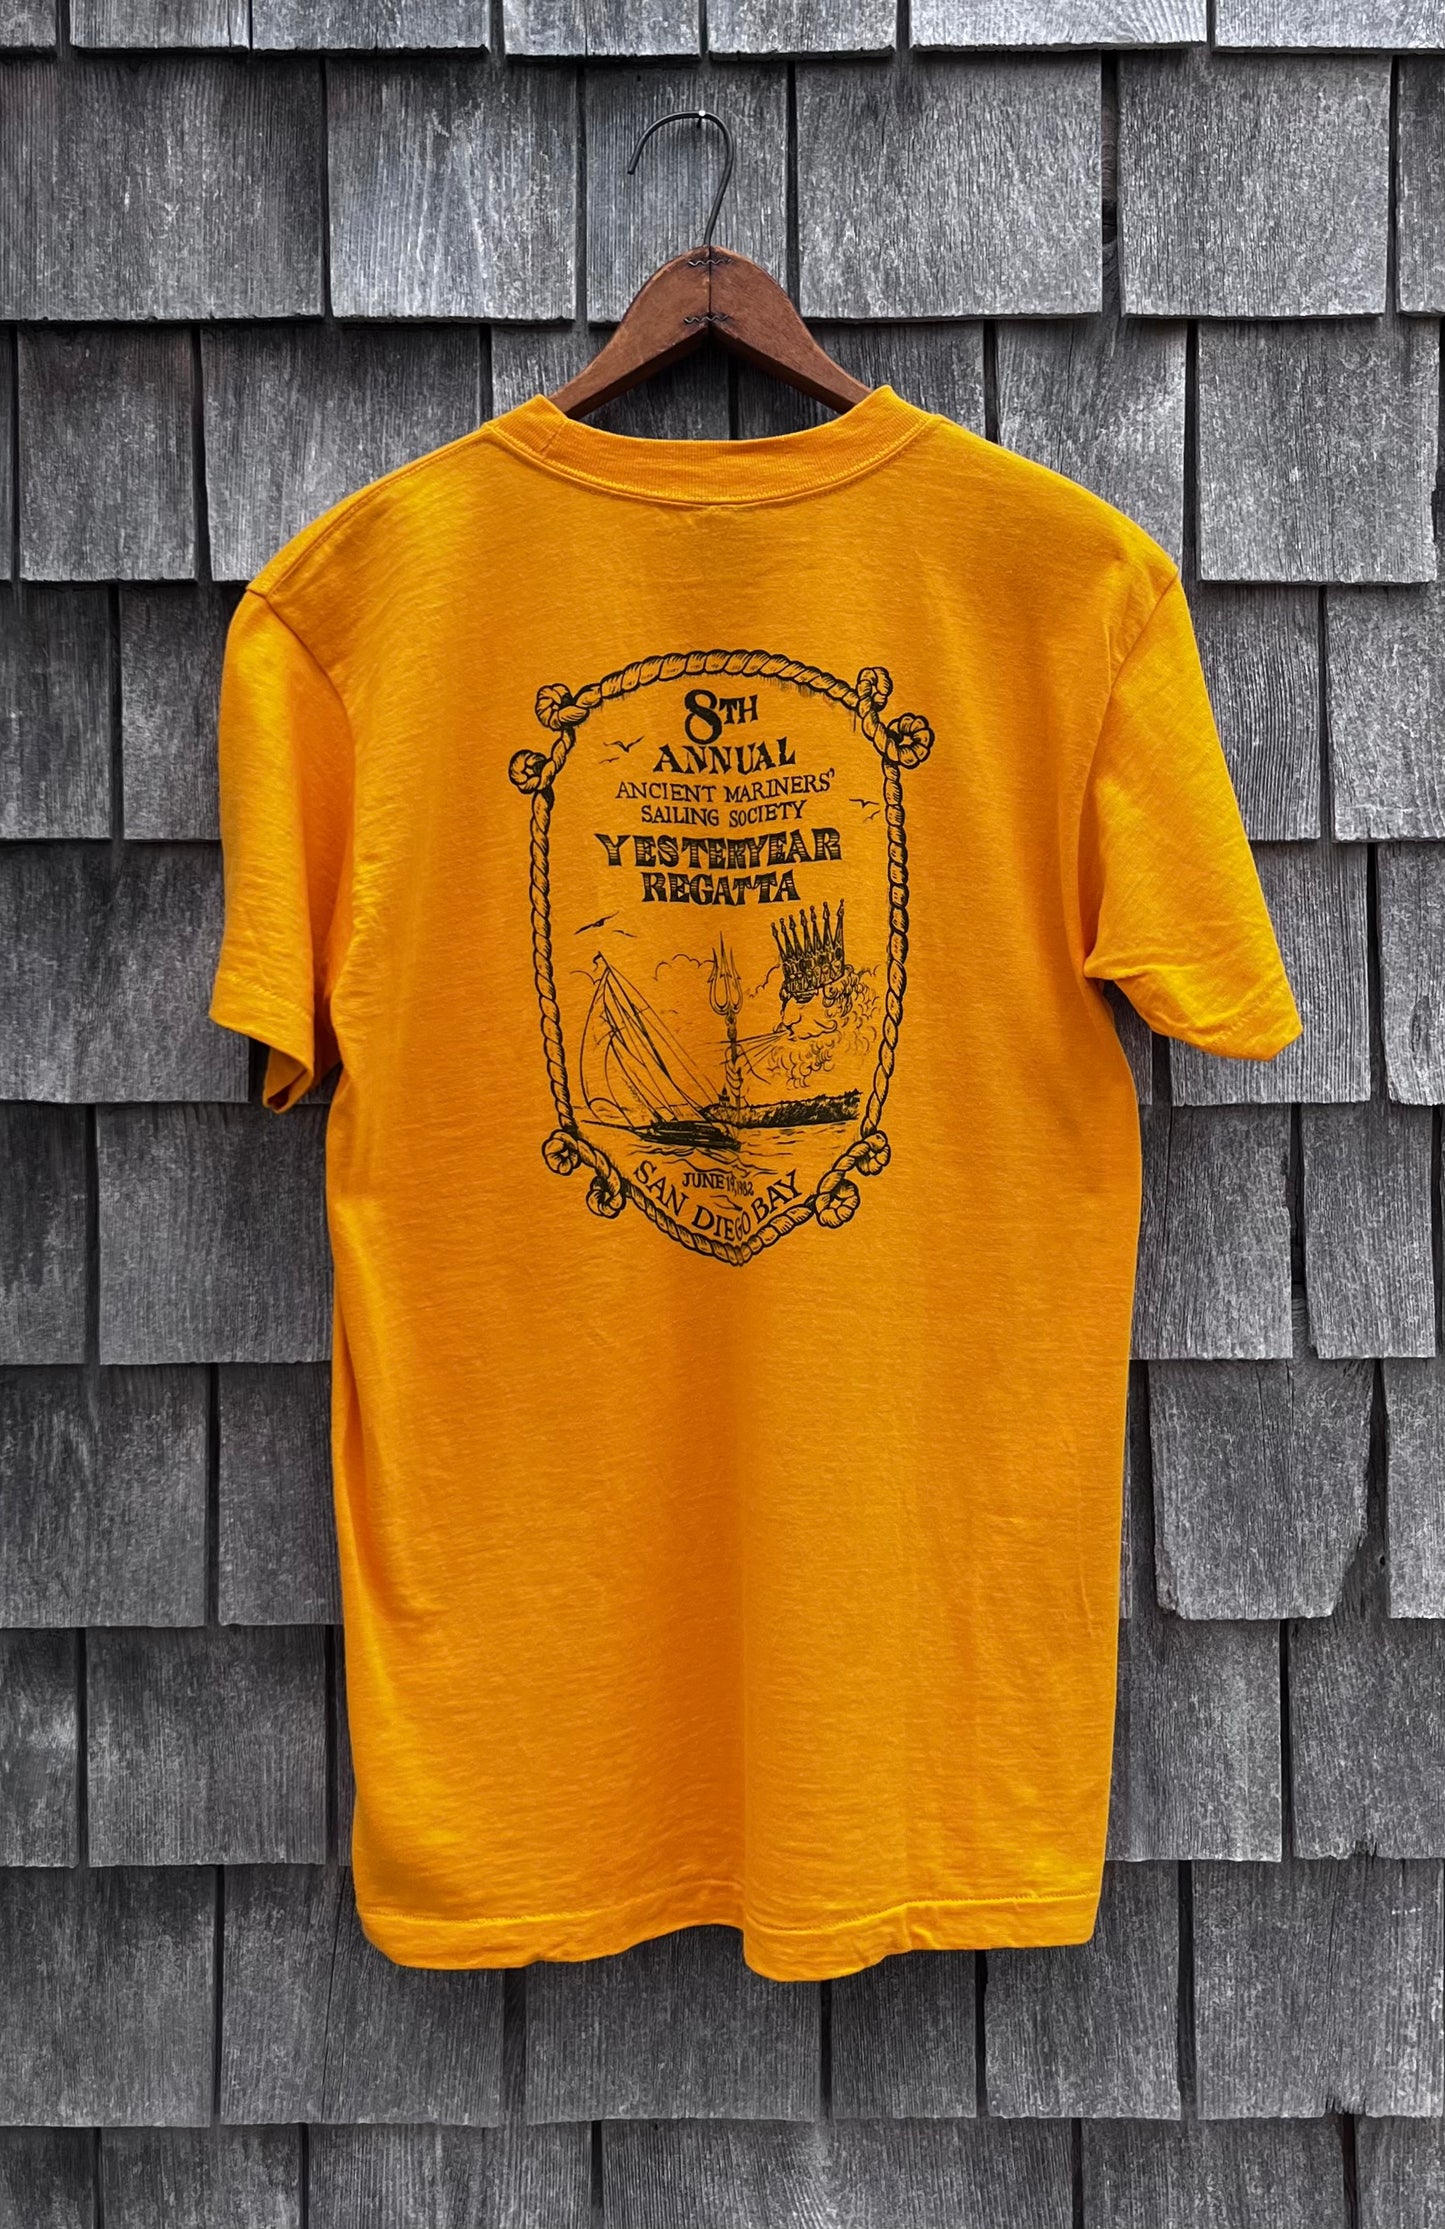 80s Ancient Mariners' Sailing Society Yesteryear Regatta T-Shirt